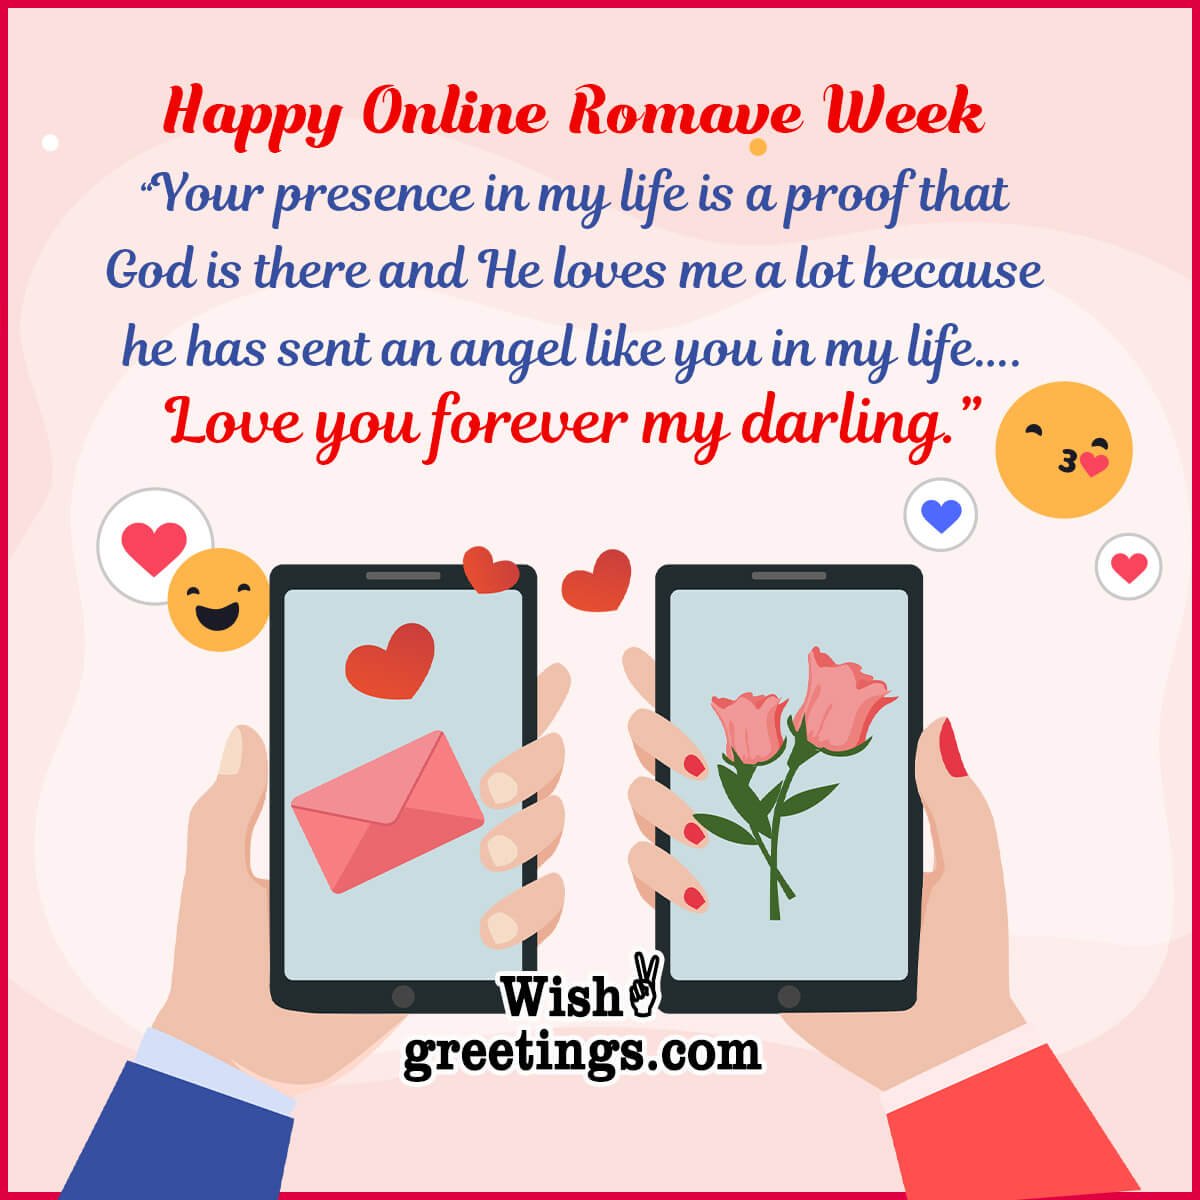 Happy Online Romance Week Image